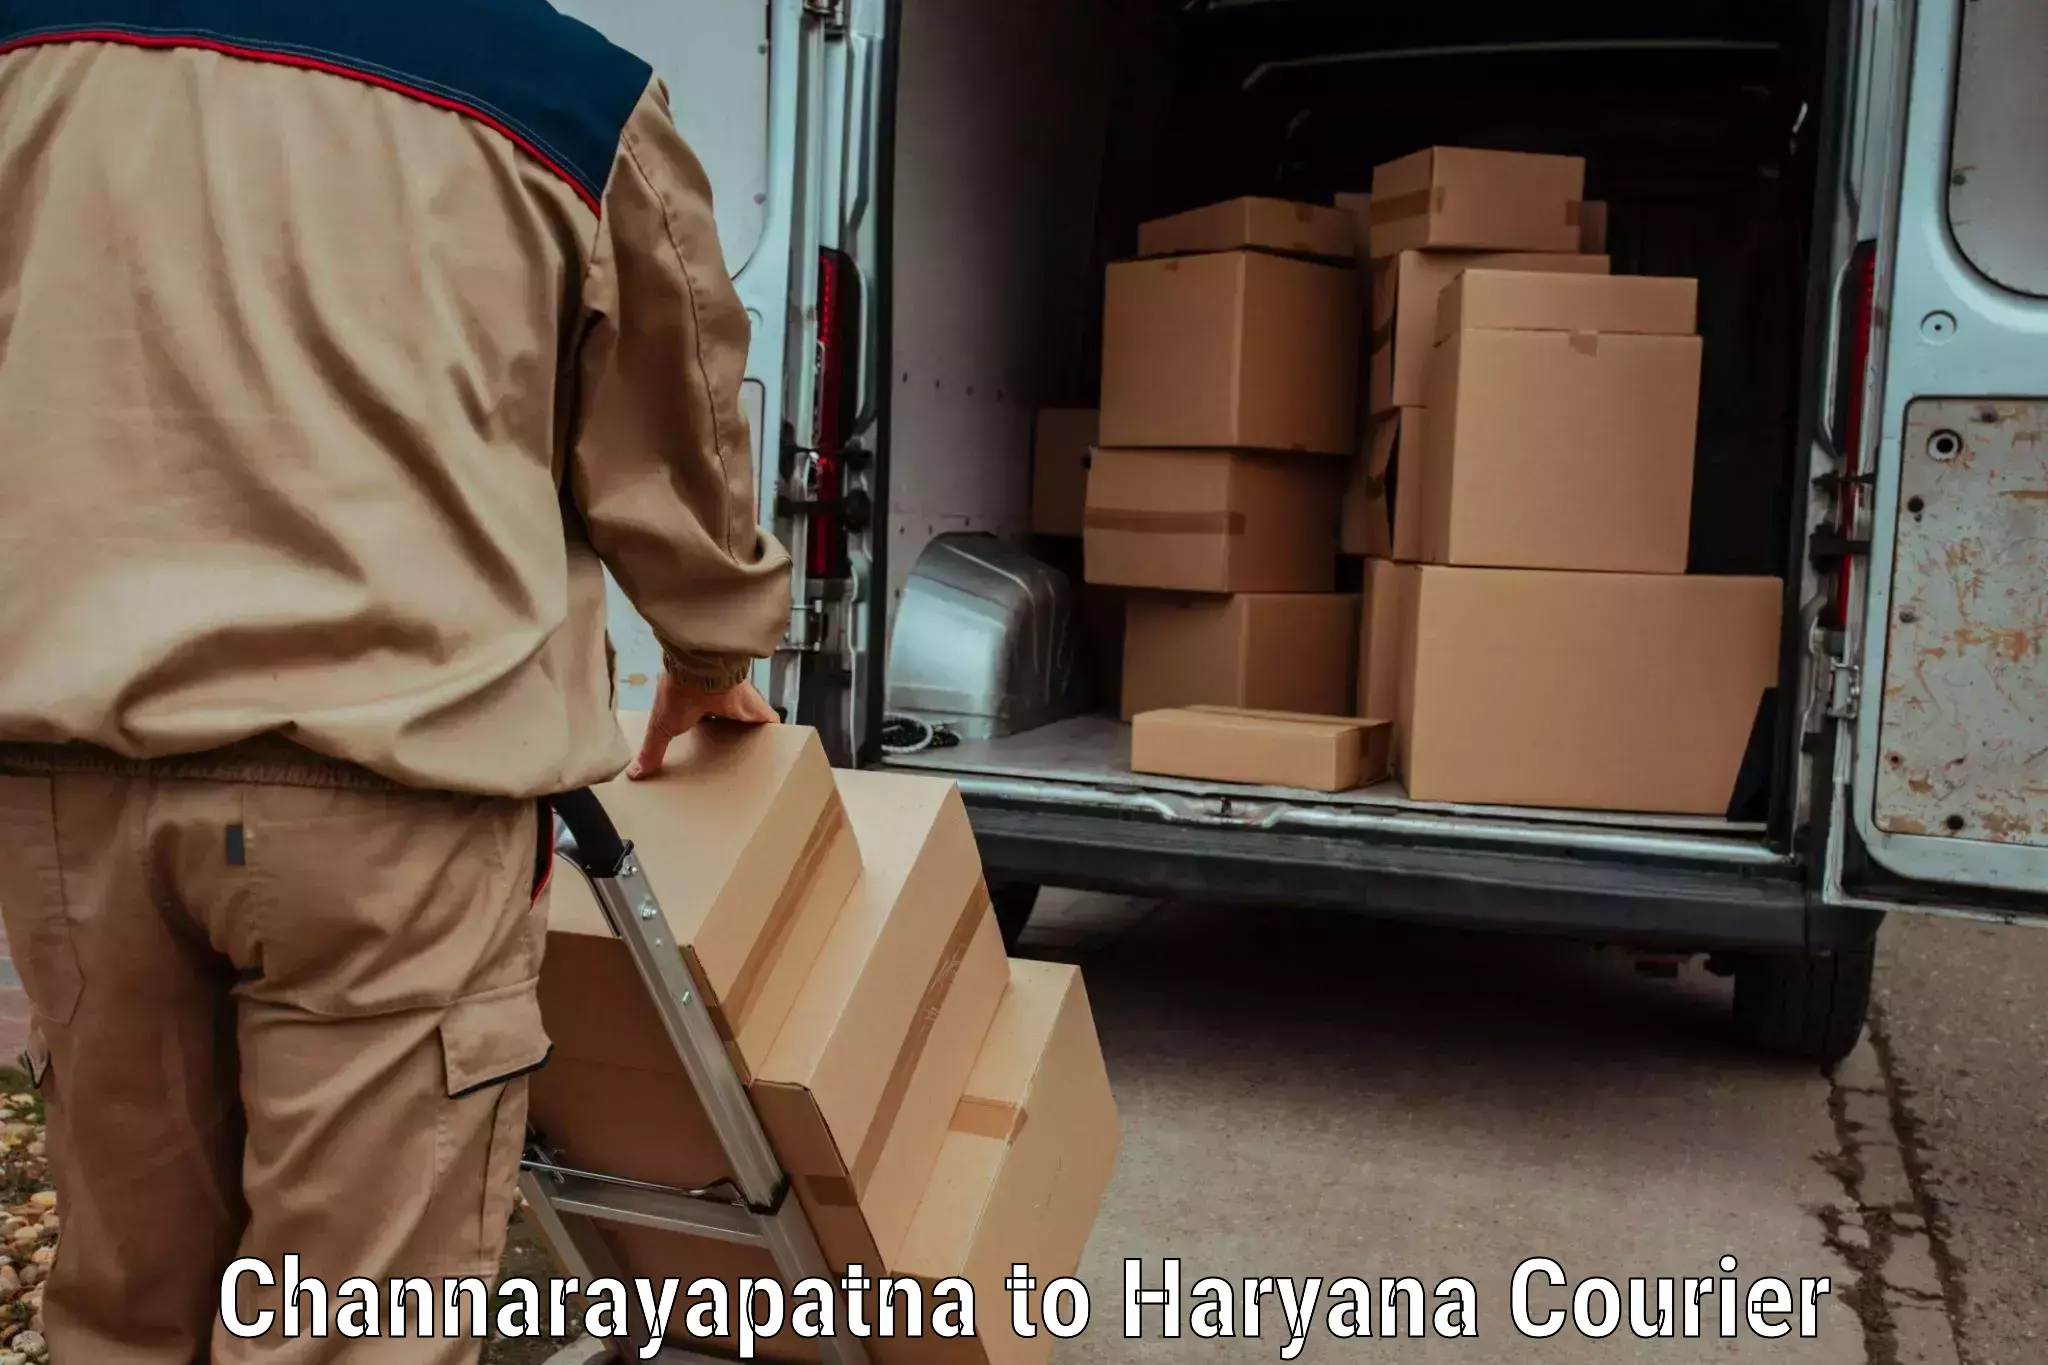 Courier service partnerships in Channarayapatna to Hodal